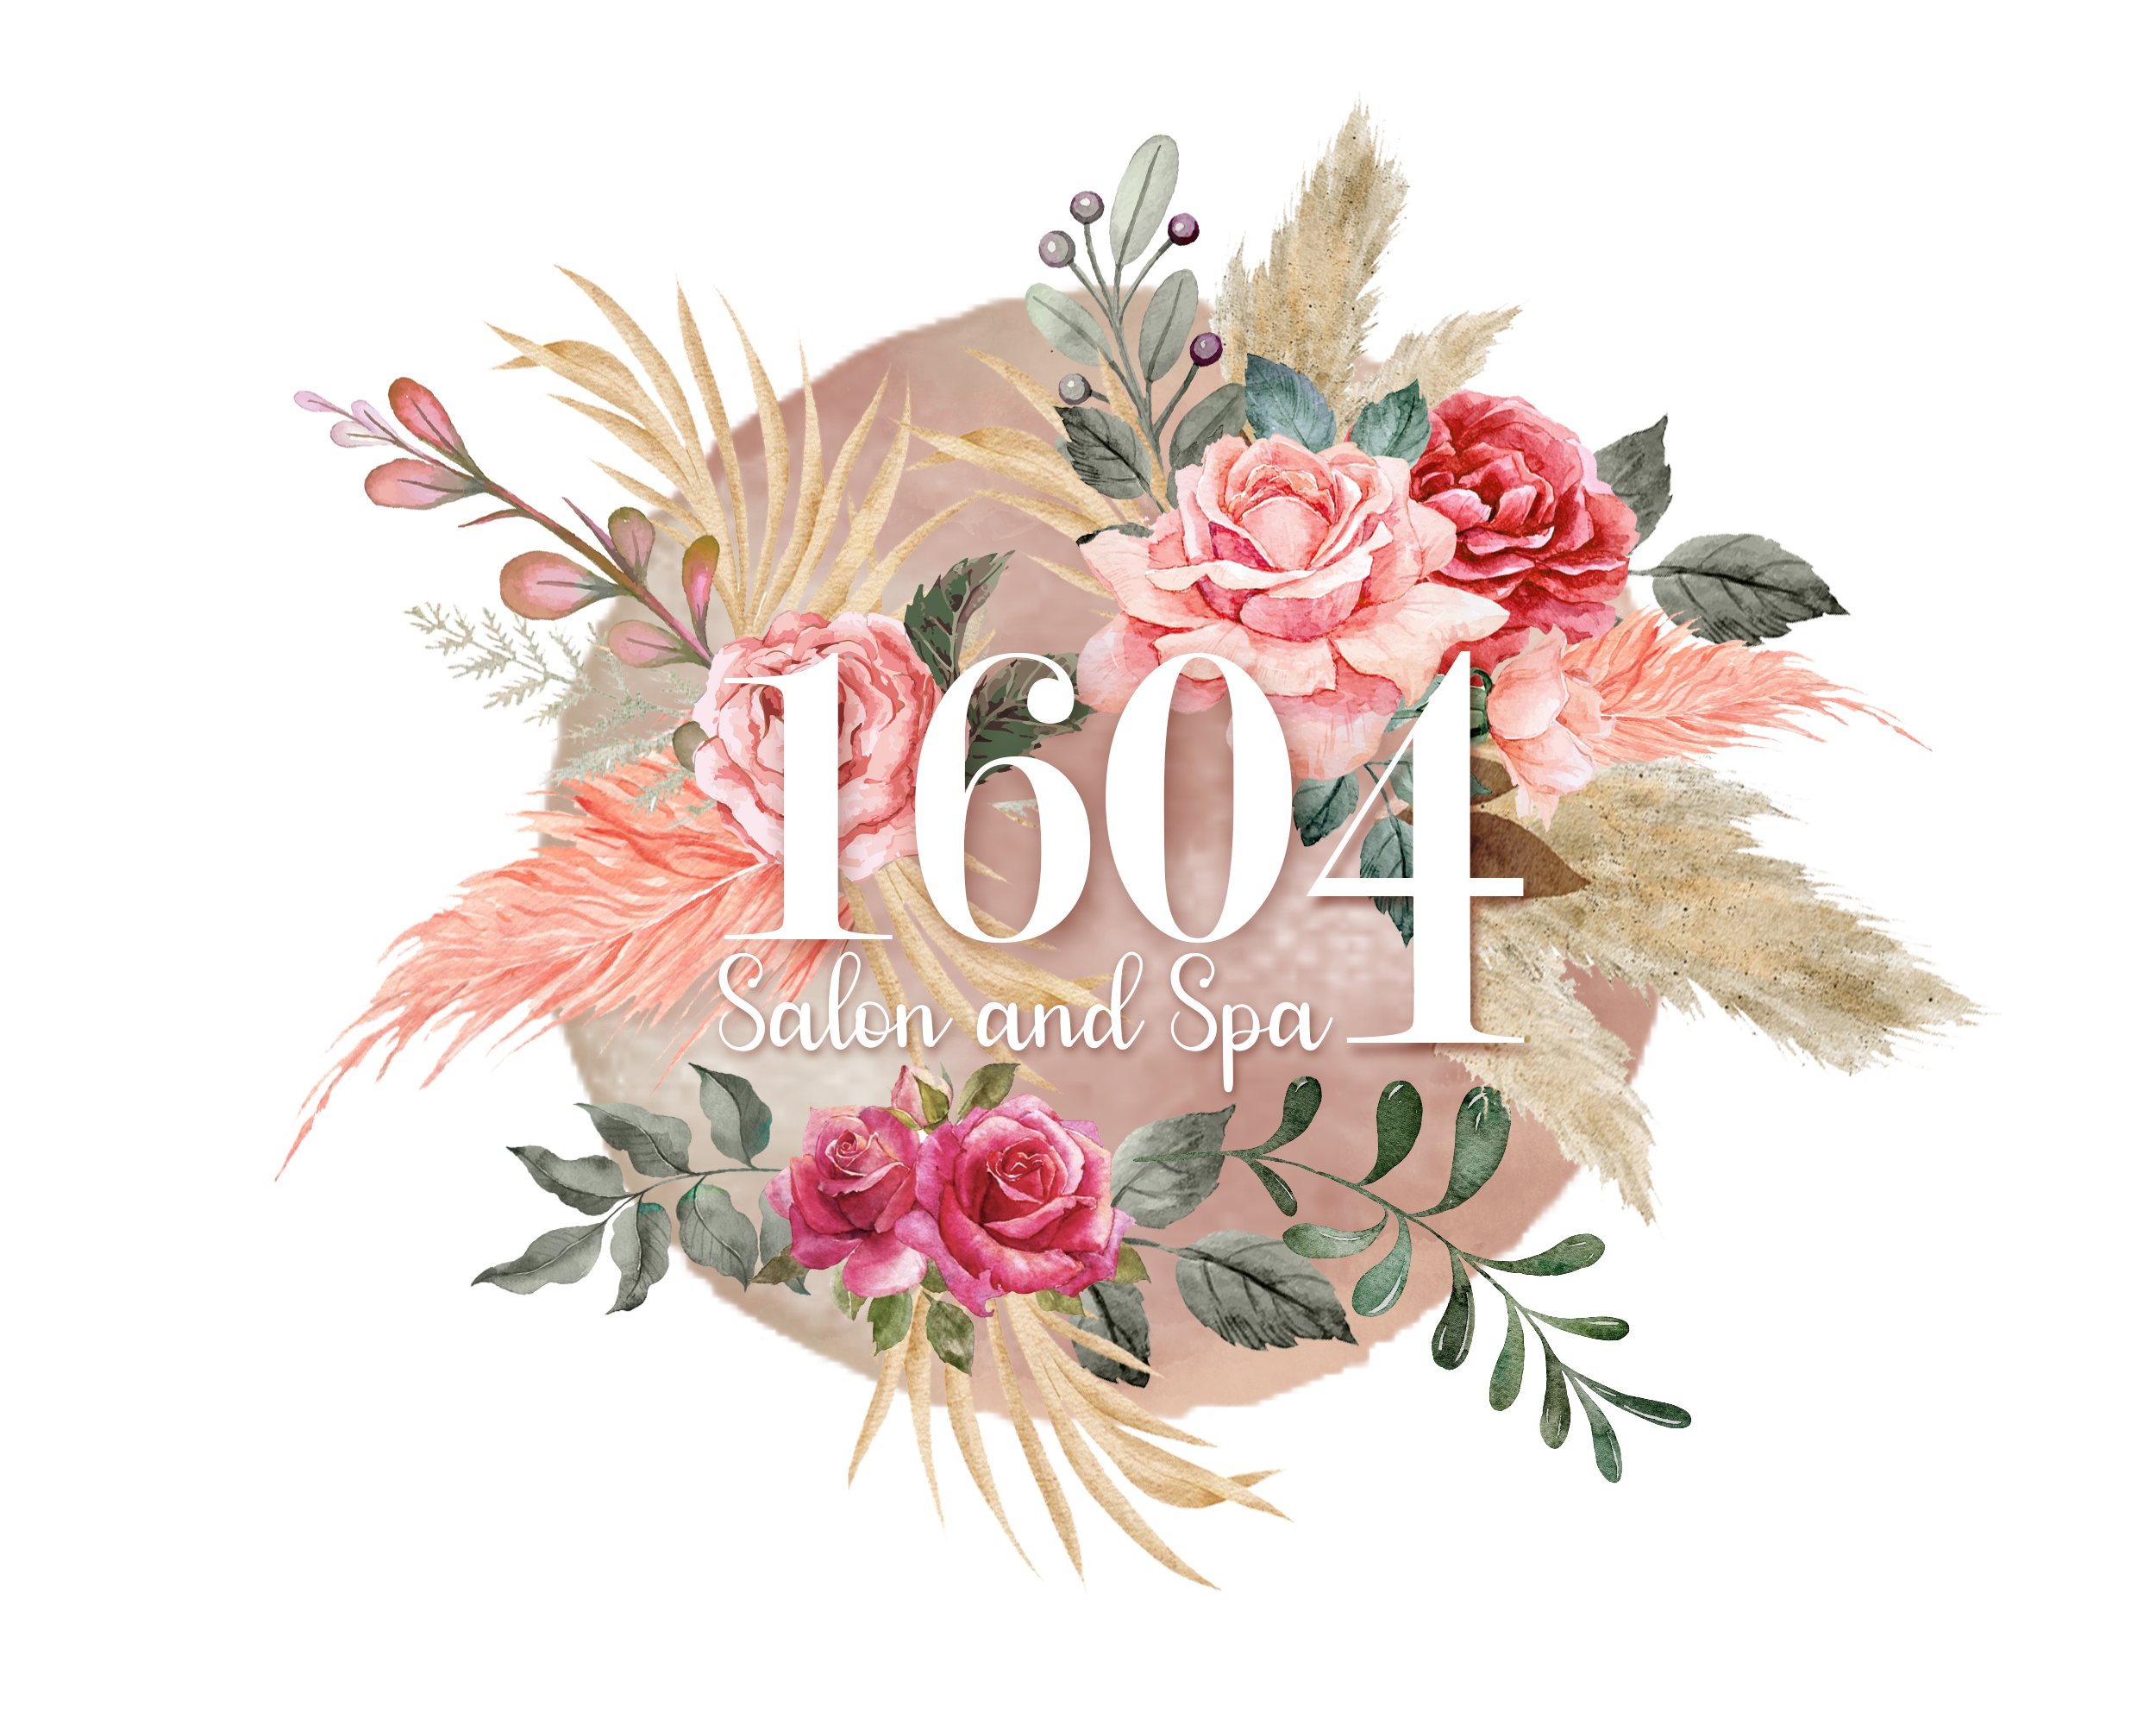 1604 Salon